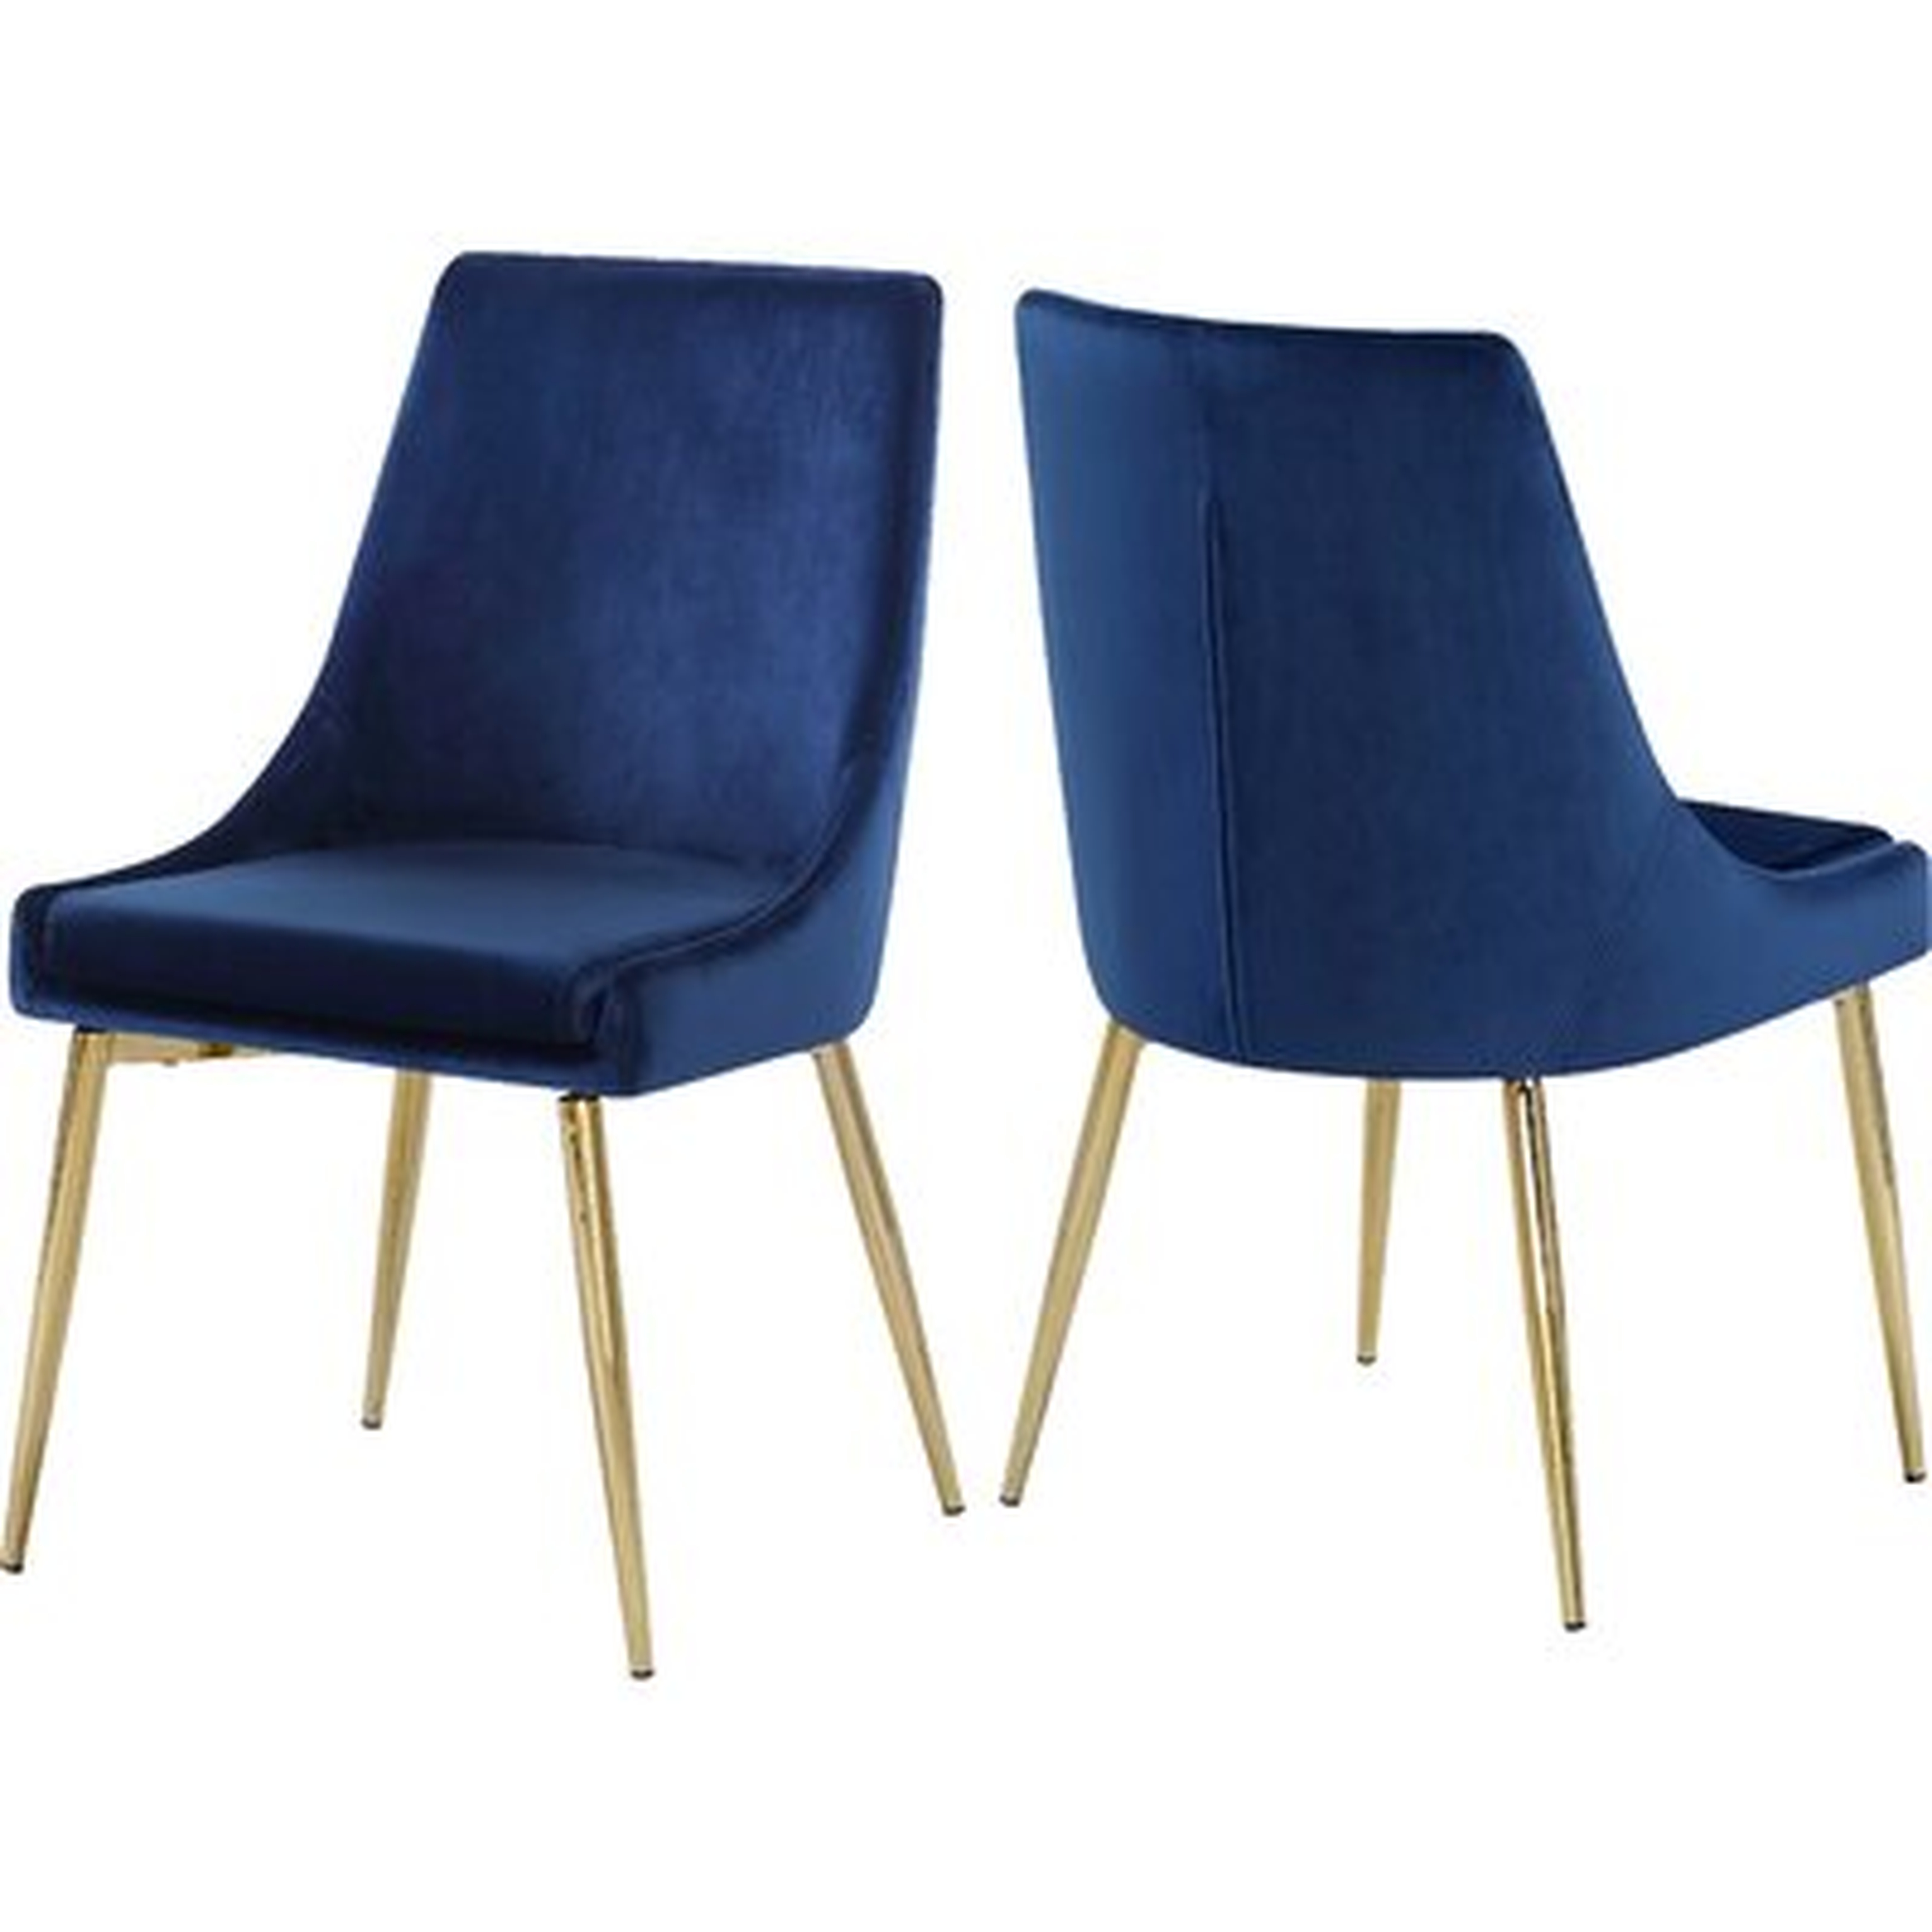 Ellenberger Upholstered Dining Chair (set of 2) - Wayfair